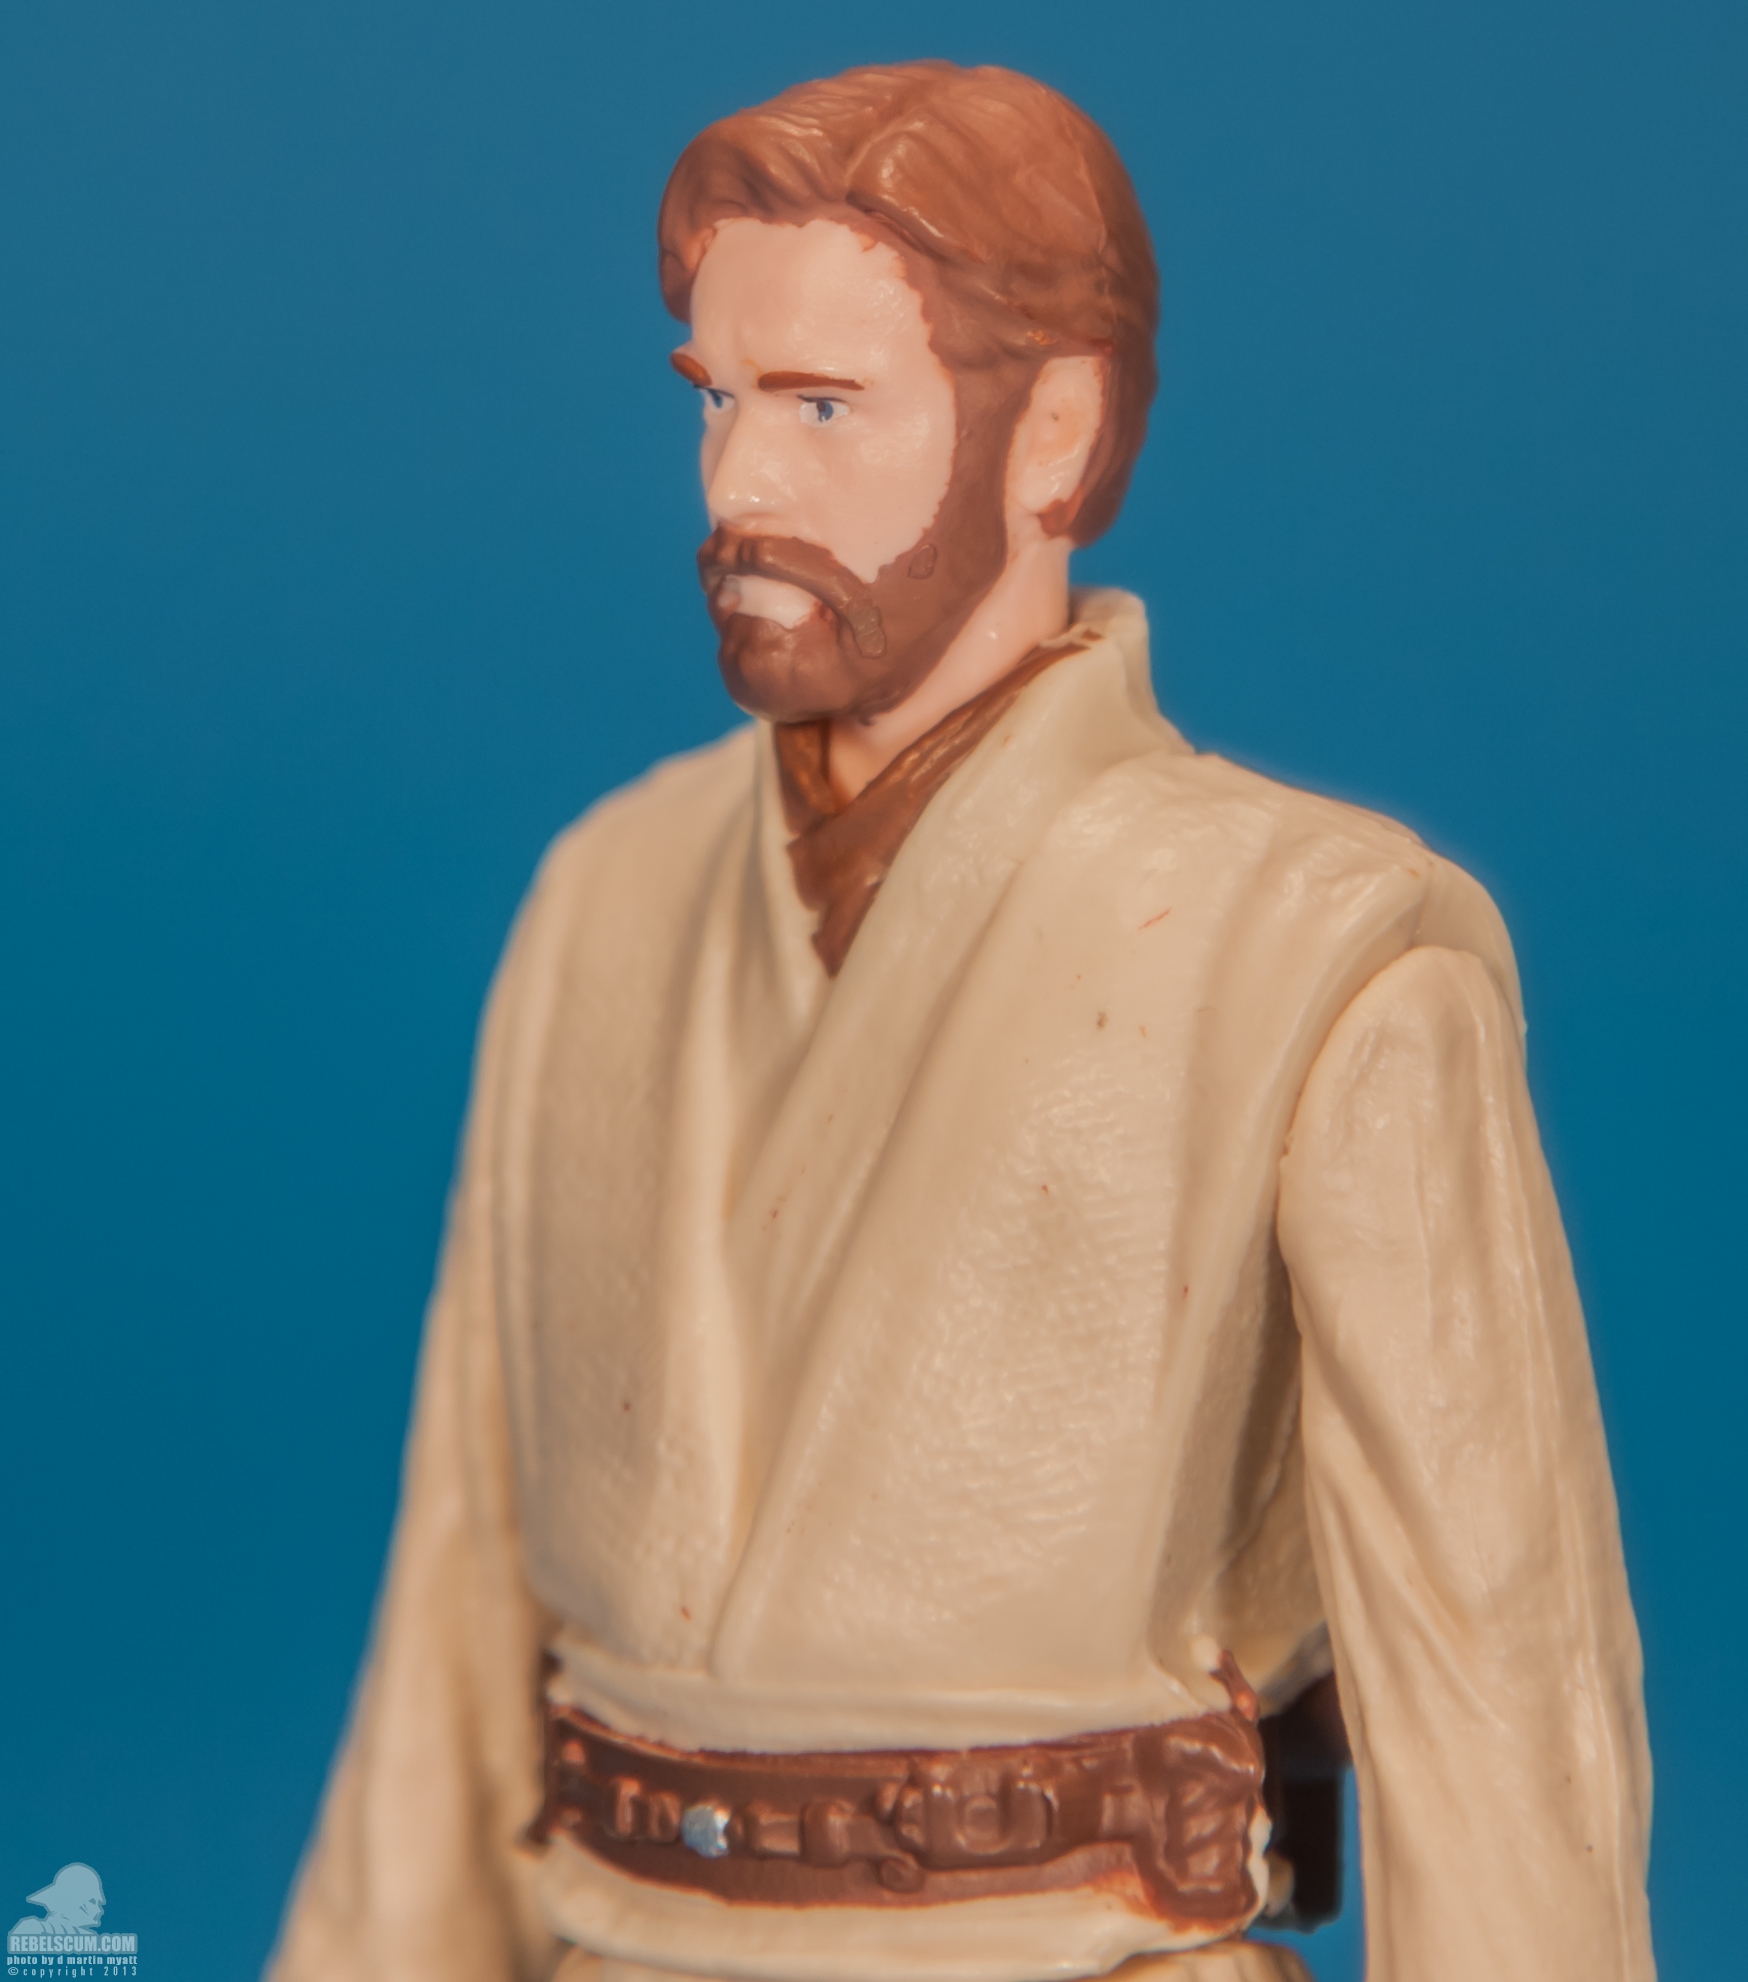 SL04-Obi-Wan-Kenobi-Saga-Legends-Star-Wars-Hasbro-007.jpg